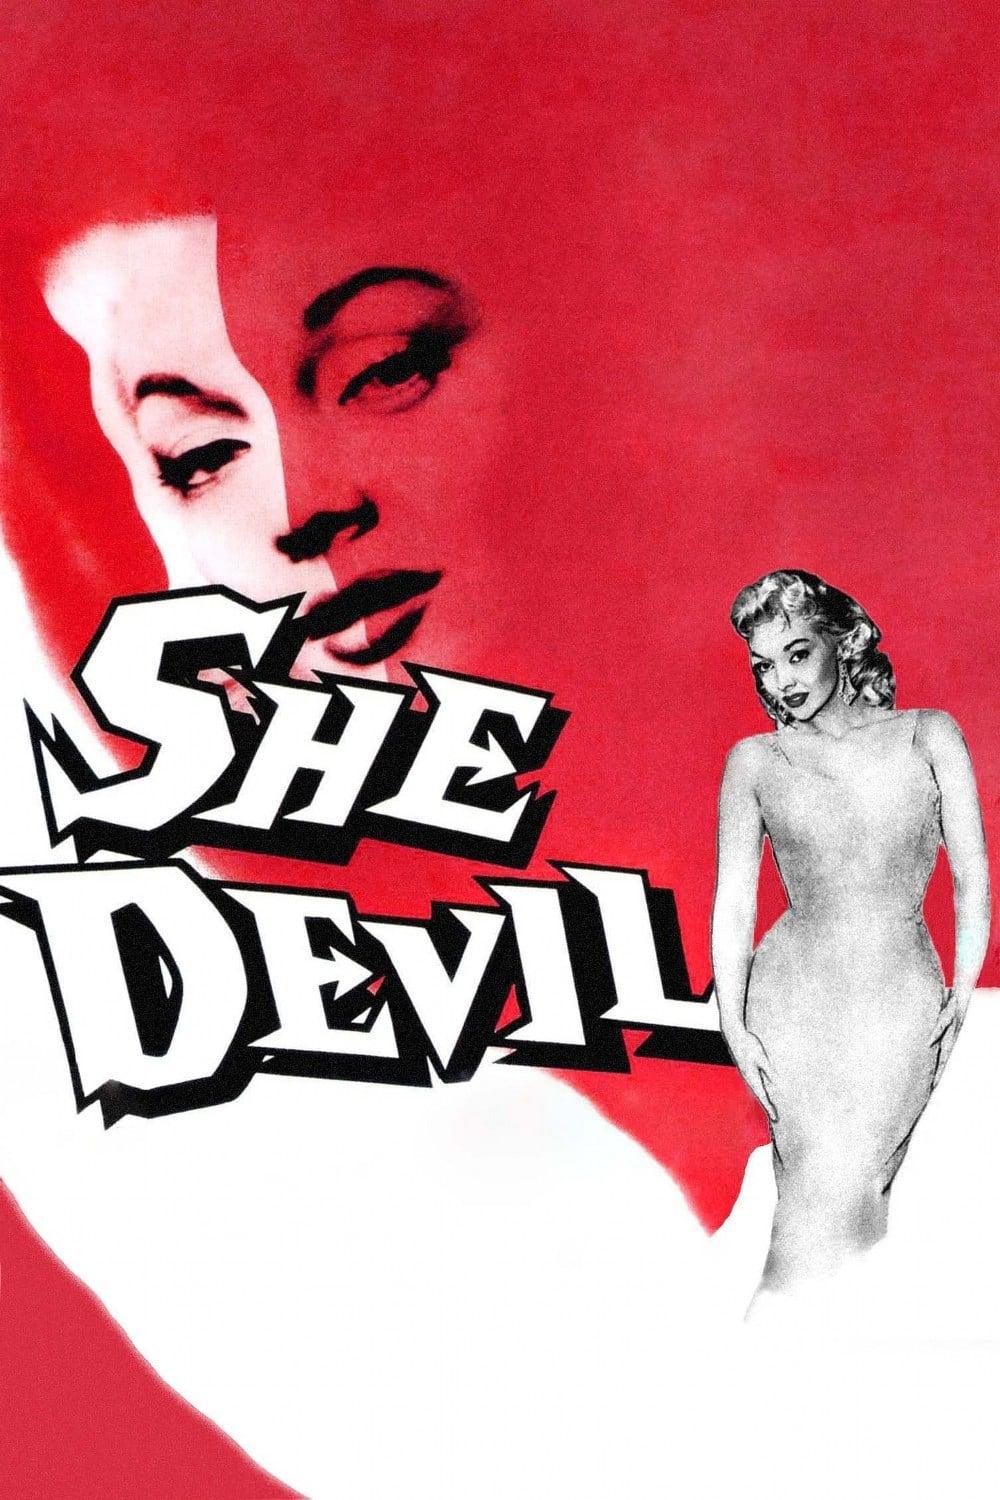 She Devil poster